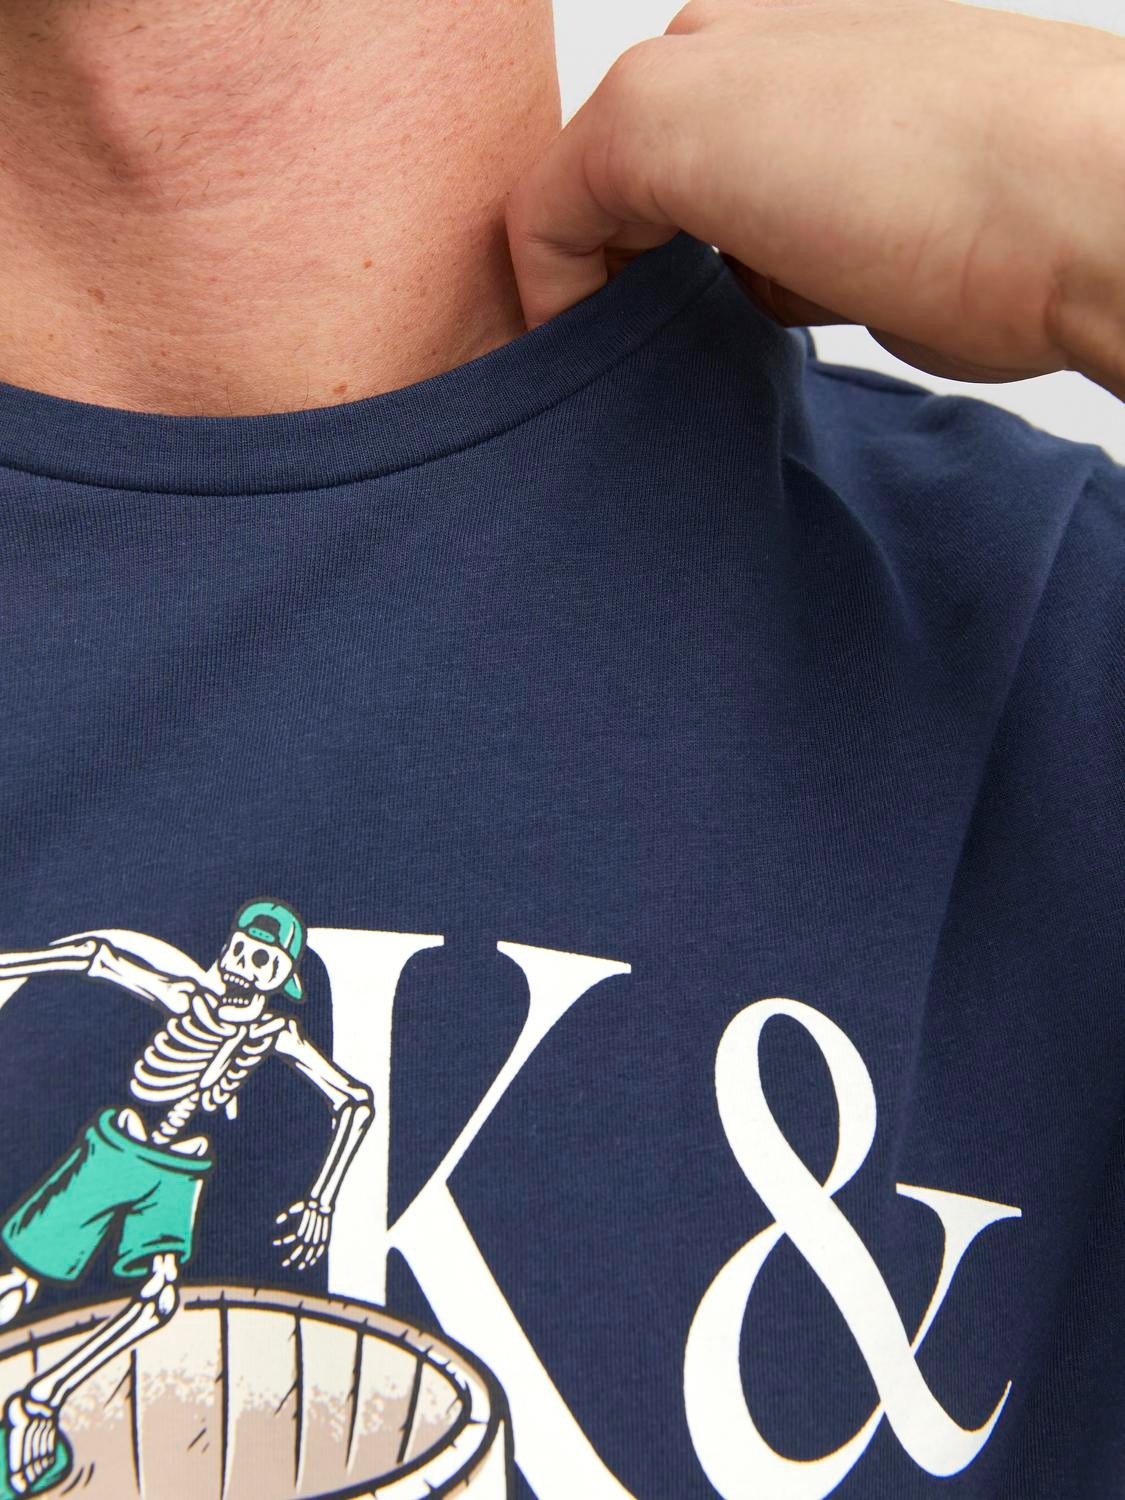 Jack & Jones Logo Crew neck T-shirt -Navy Blazer - 12241950